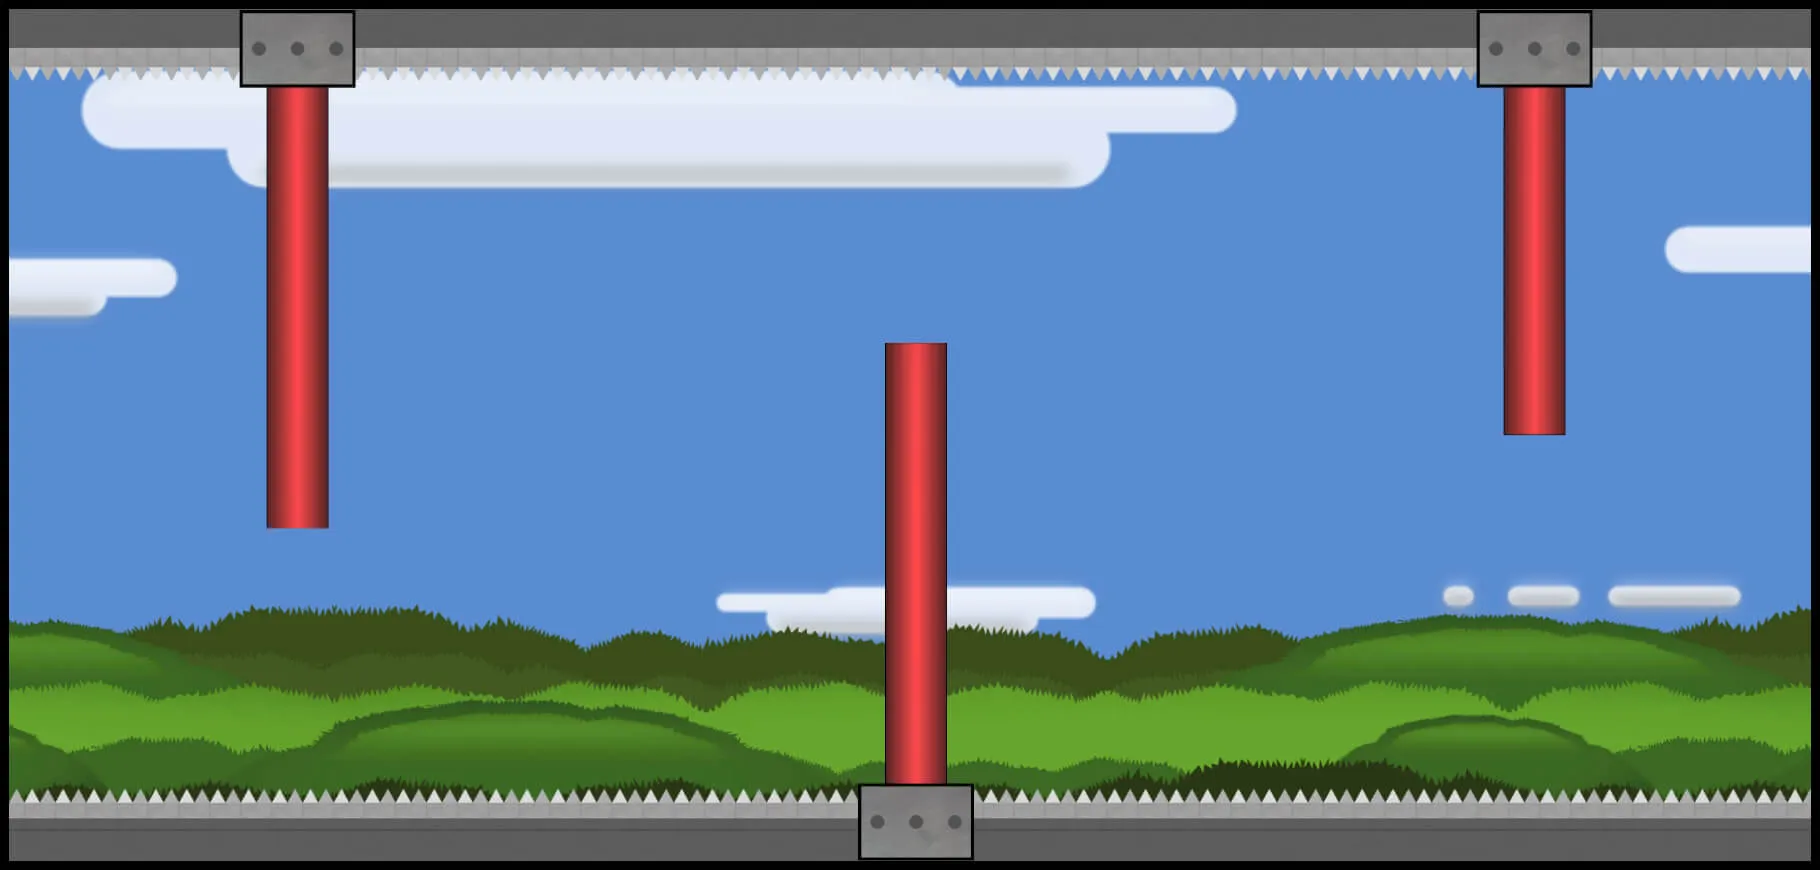 hello world level screenshot from the game reflex runner.